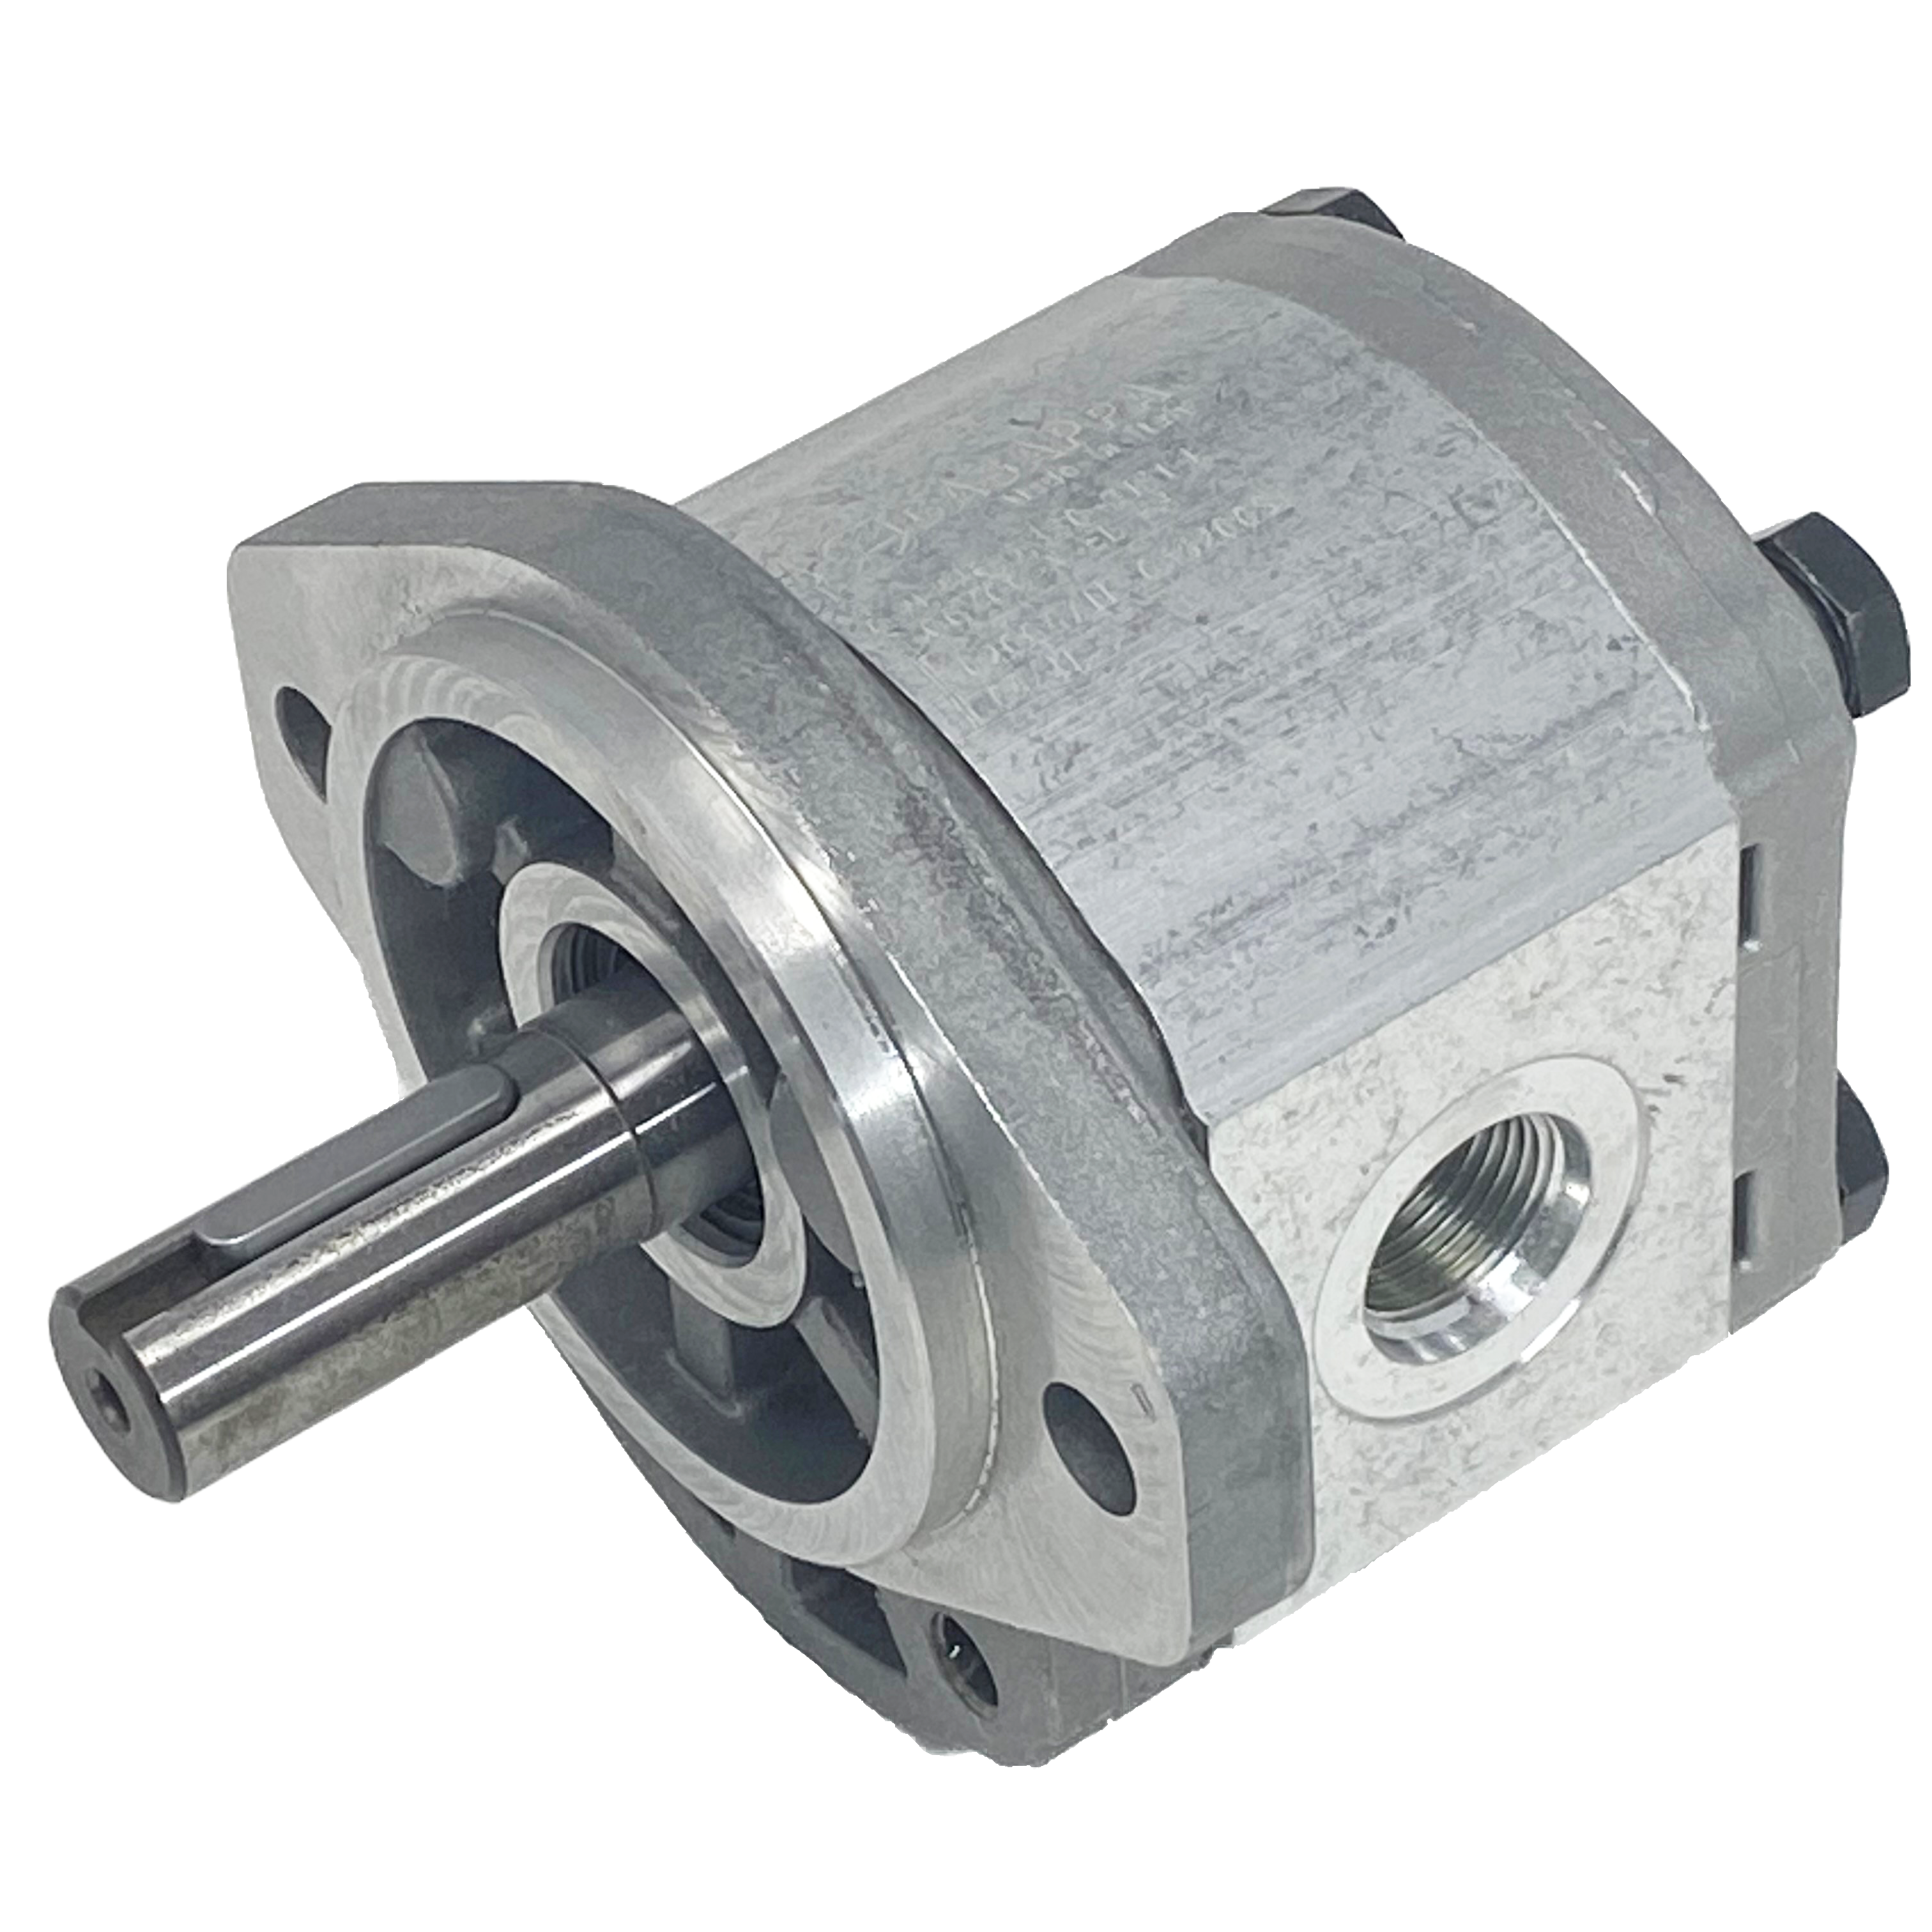 PLM20.6,3B0-49S1-LOC/OC-N-EL : Casappa Polaris Gear Motor, 6.61cc, 3625psi Rated, 4000RPM, Reversible Interior Drain, 3/4" Bore x 3/16" Key Shaft, SAE A 2-Bolt Flange, 0.625 (5/8") #10 SAE Inlet, 0.625 (5/8") #10 SAE Outlet, Aluminum Body & Flange